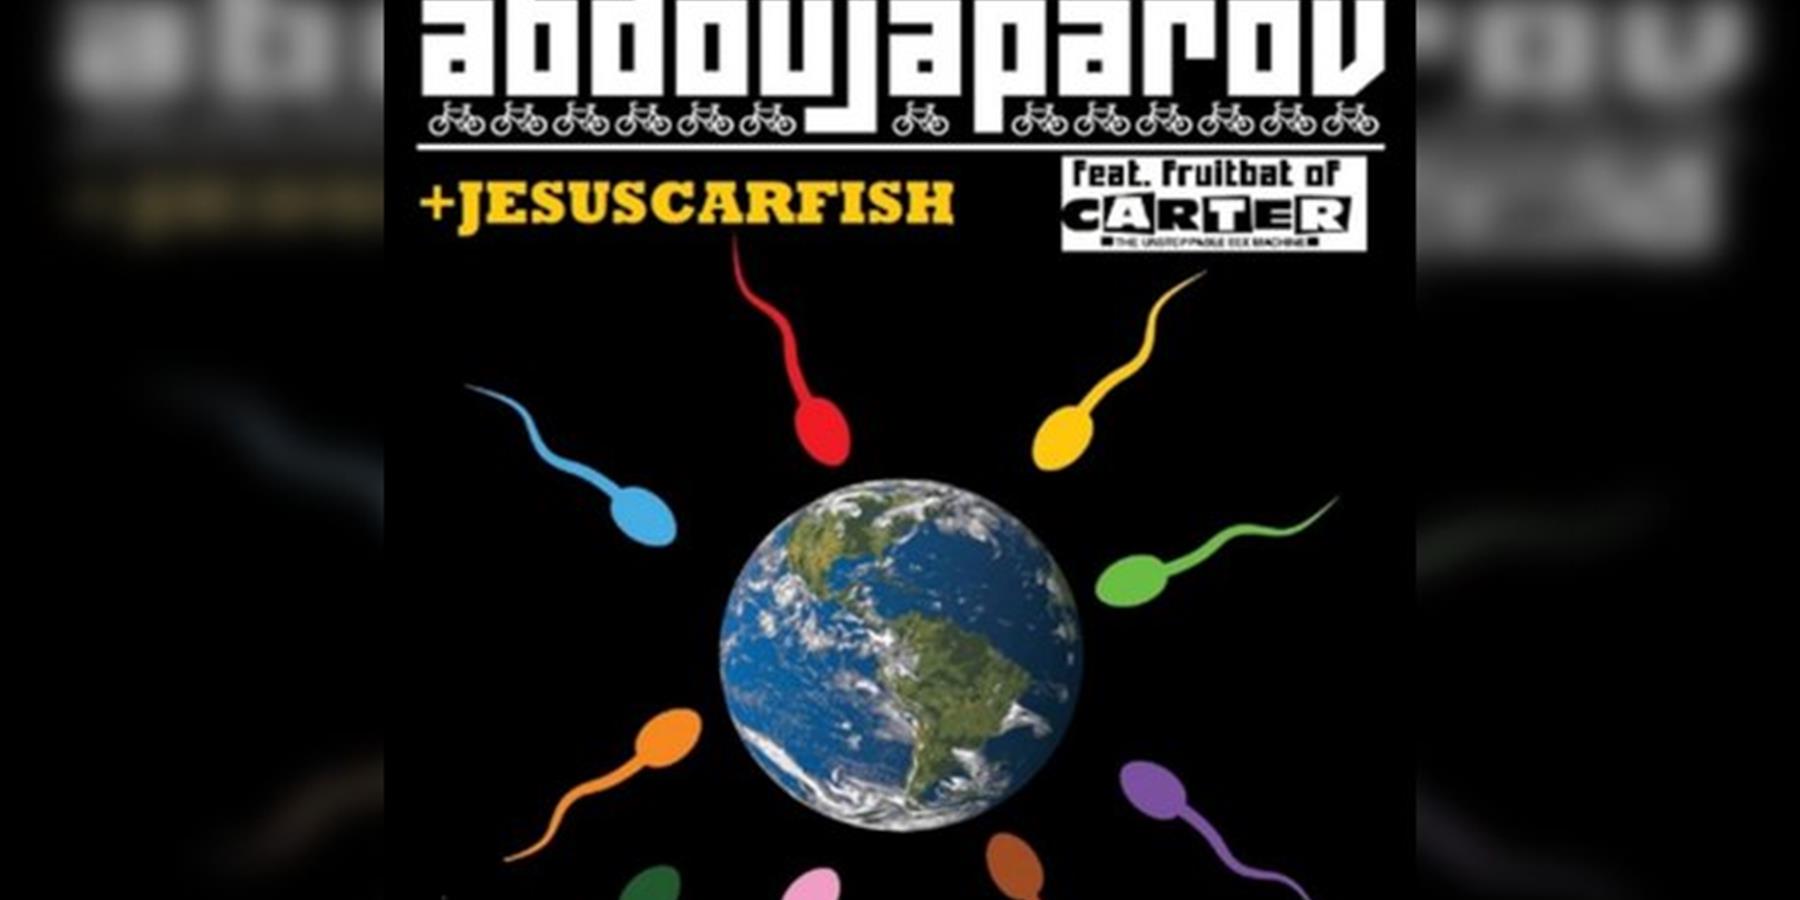 Abdoujaparov + Tbc + Jesuscarfish